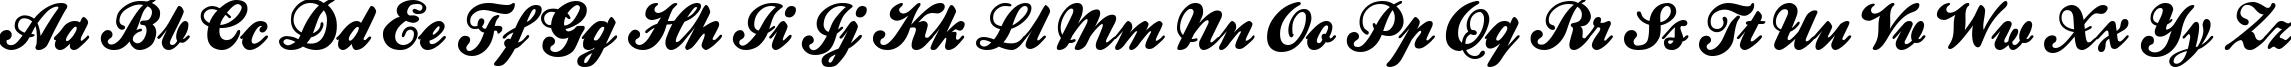 Пример написания английского алфавита шрифтом Ballpark Weiner